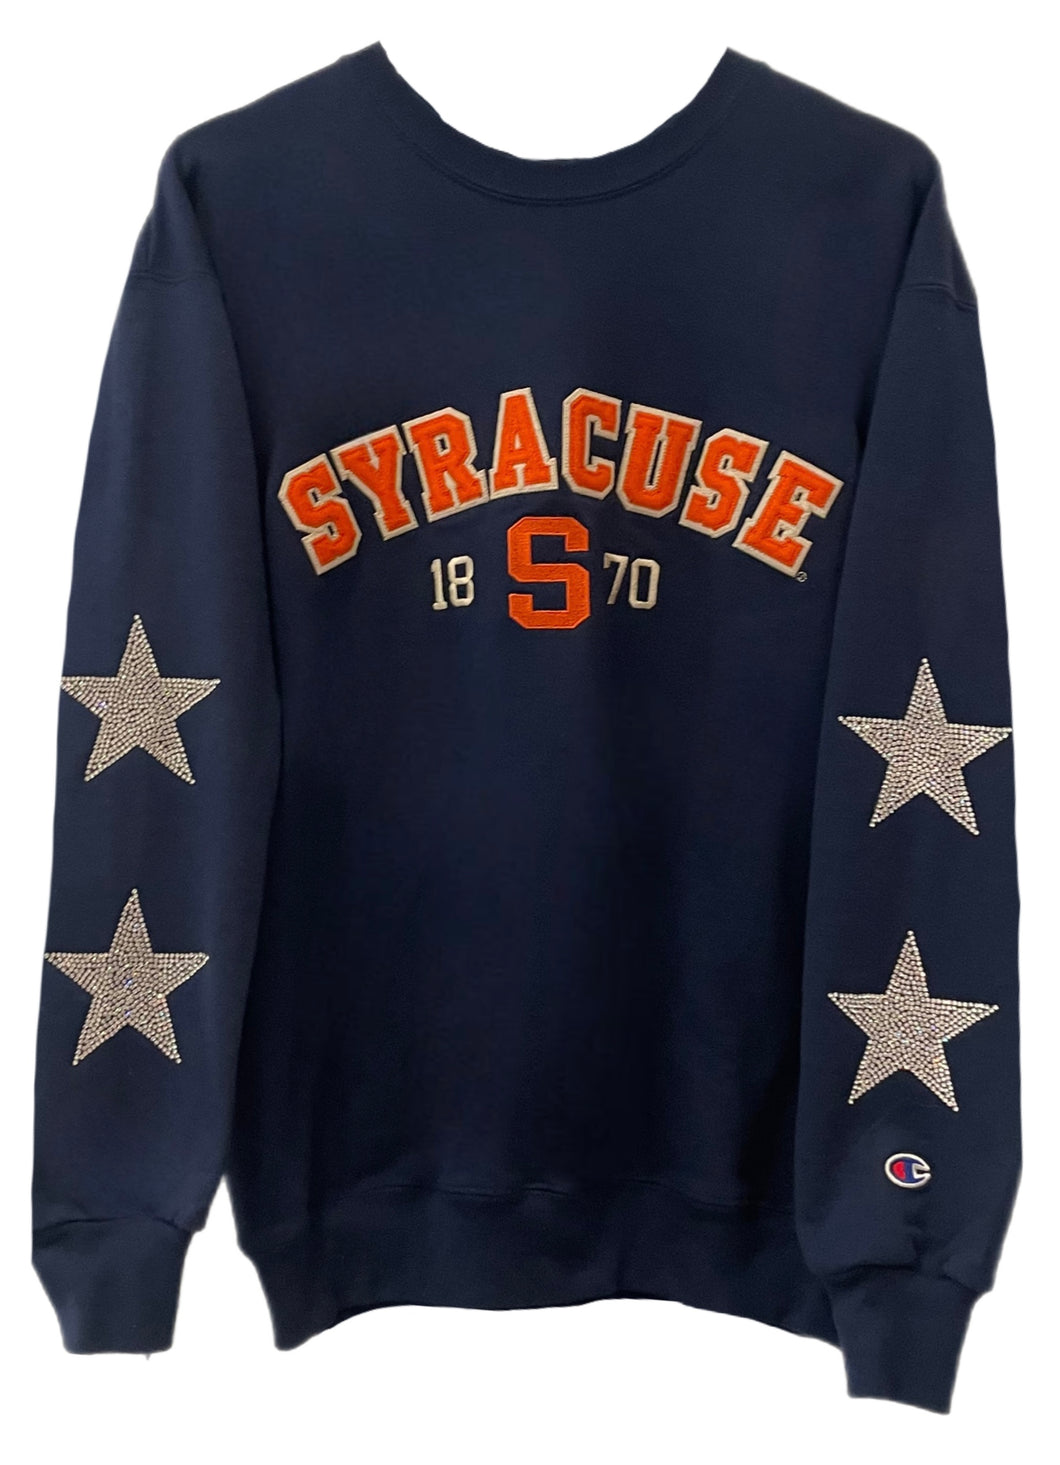 Syracuse University, One of a KIND Vintage Sweatshirt with Crystal Star Design